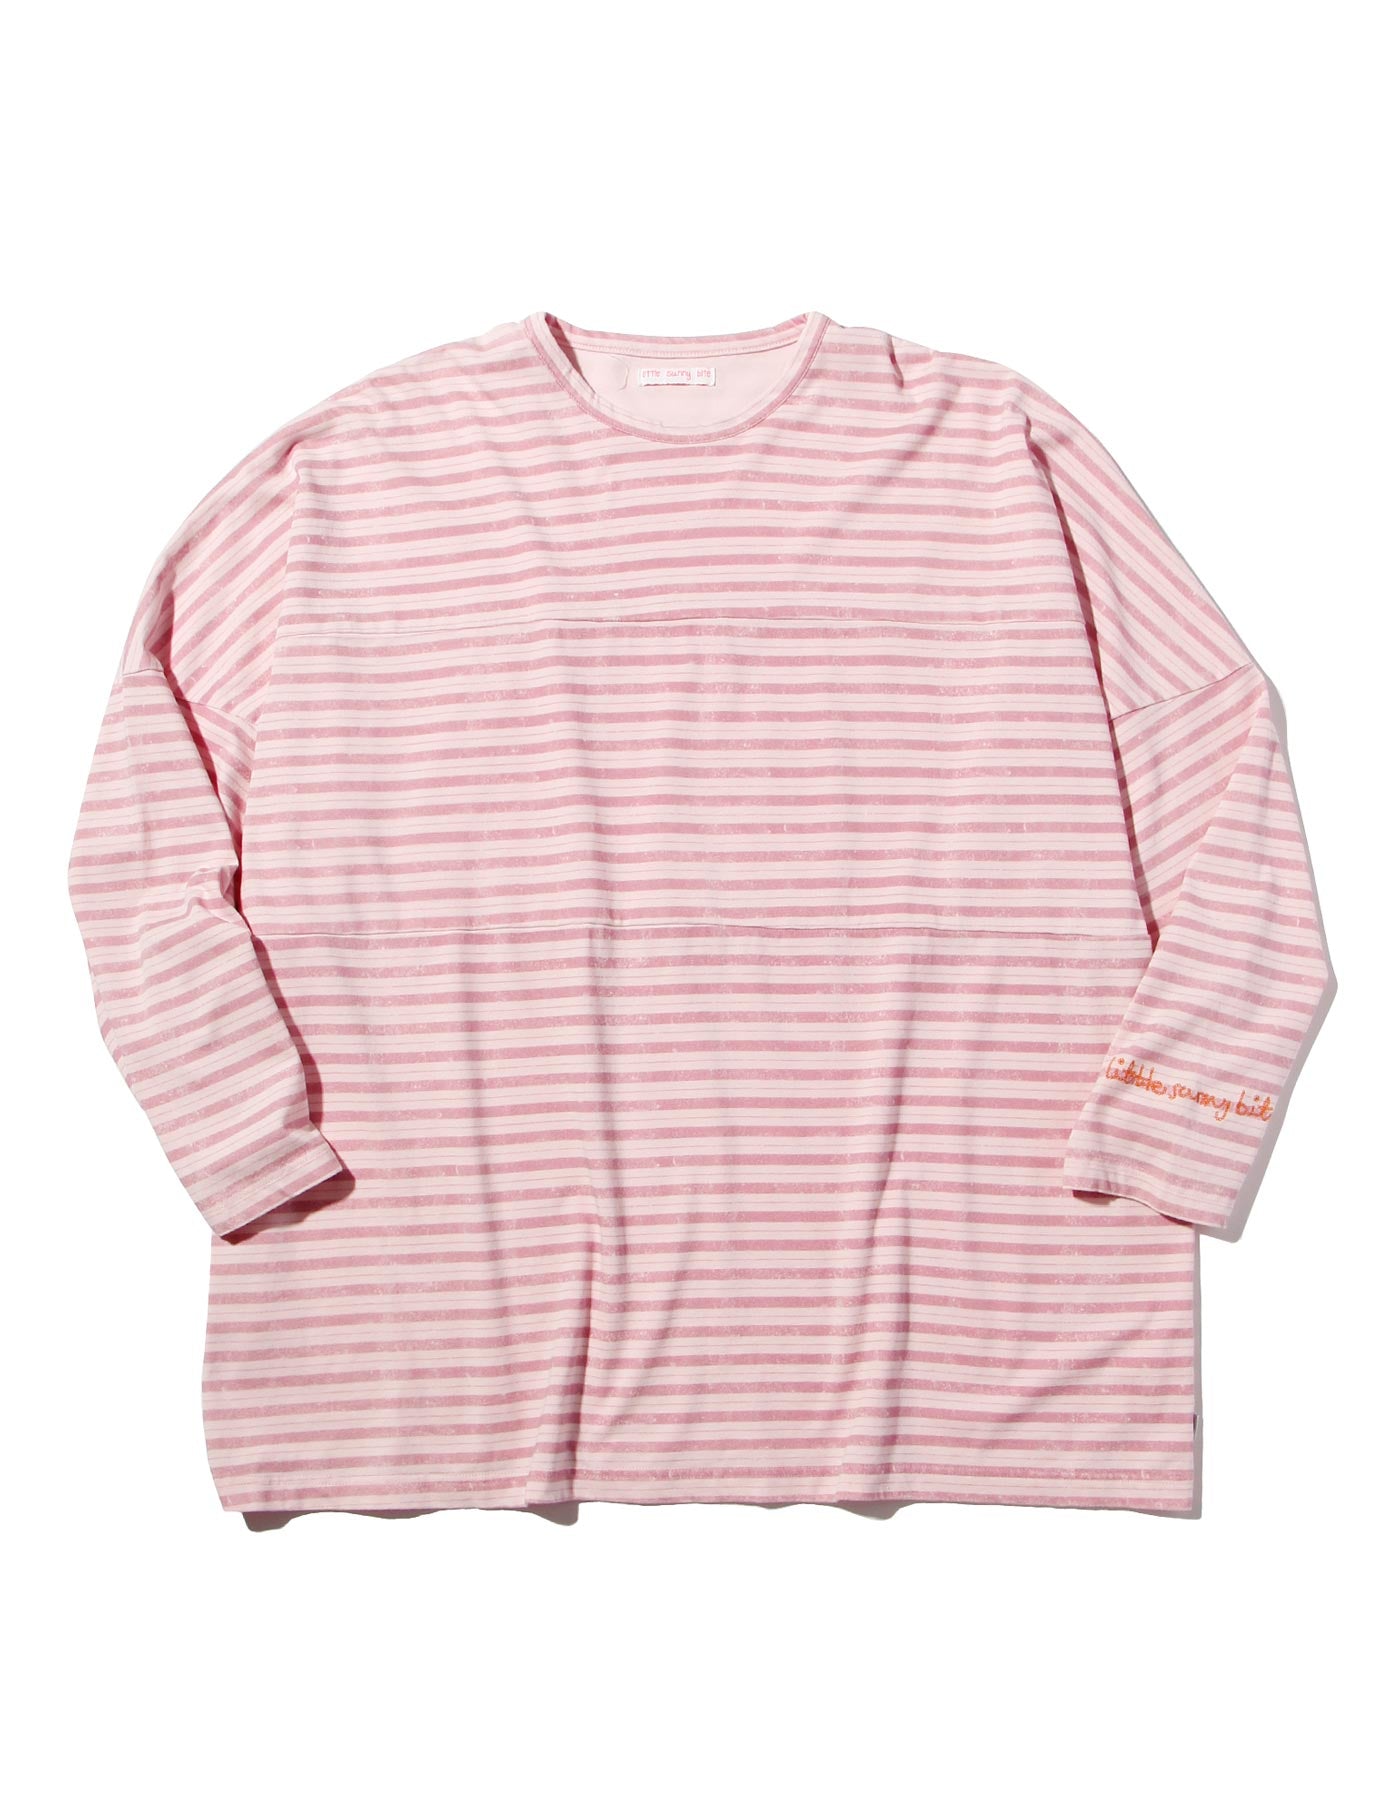 Stripe big long tee little sunny bite - Tシャツ/カットソー(七分/長袖)